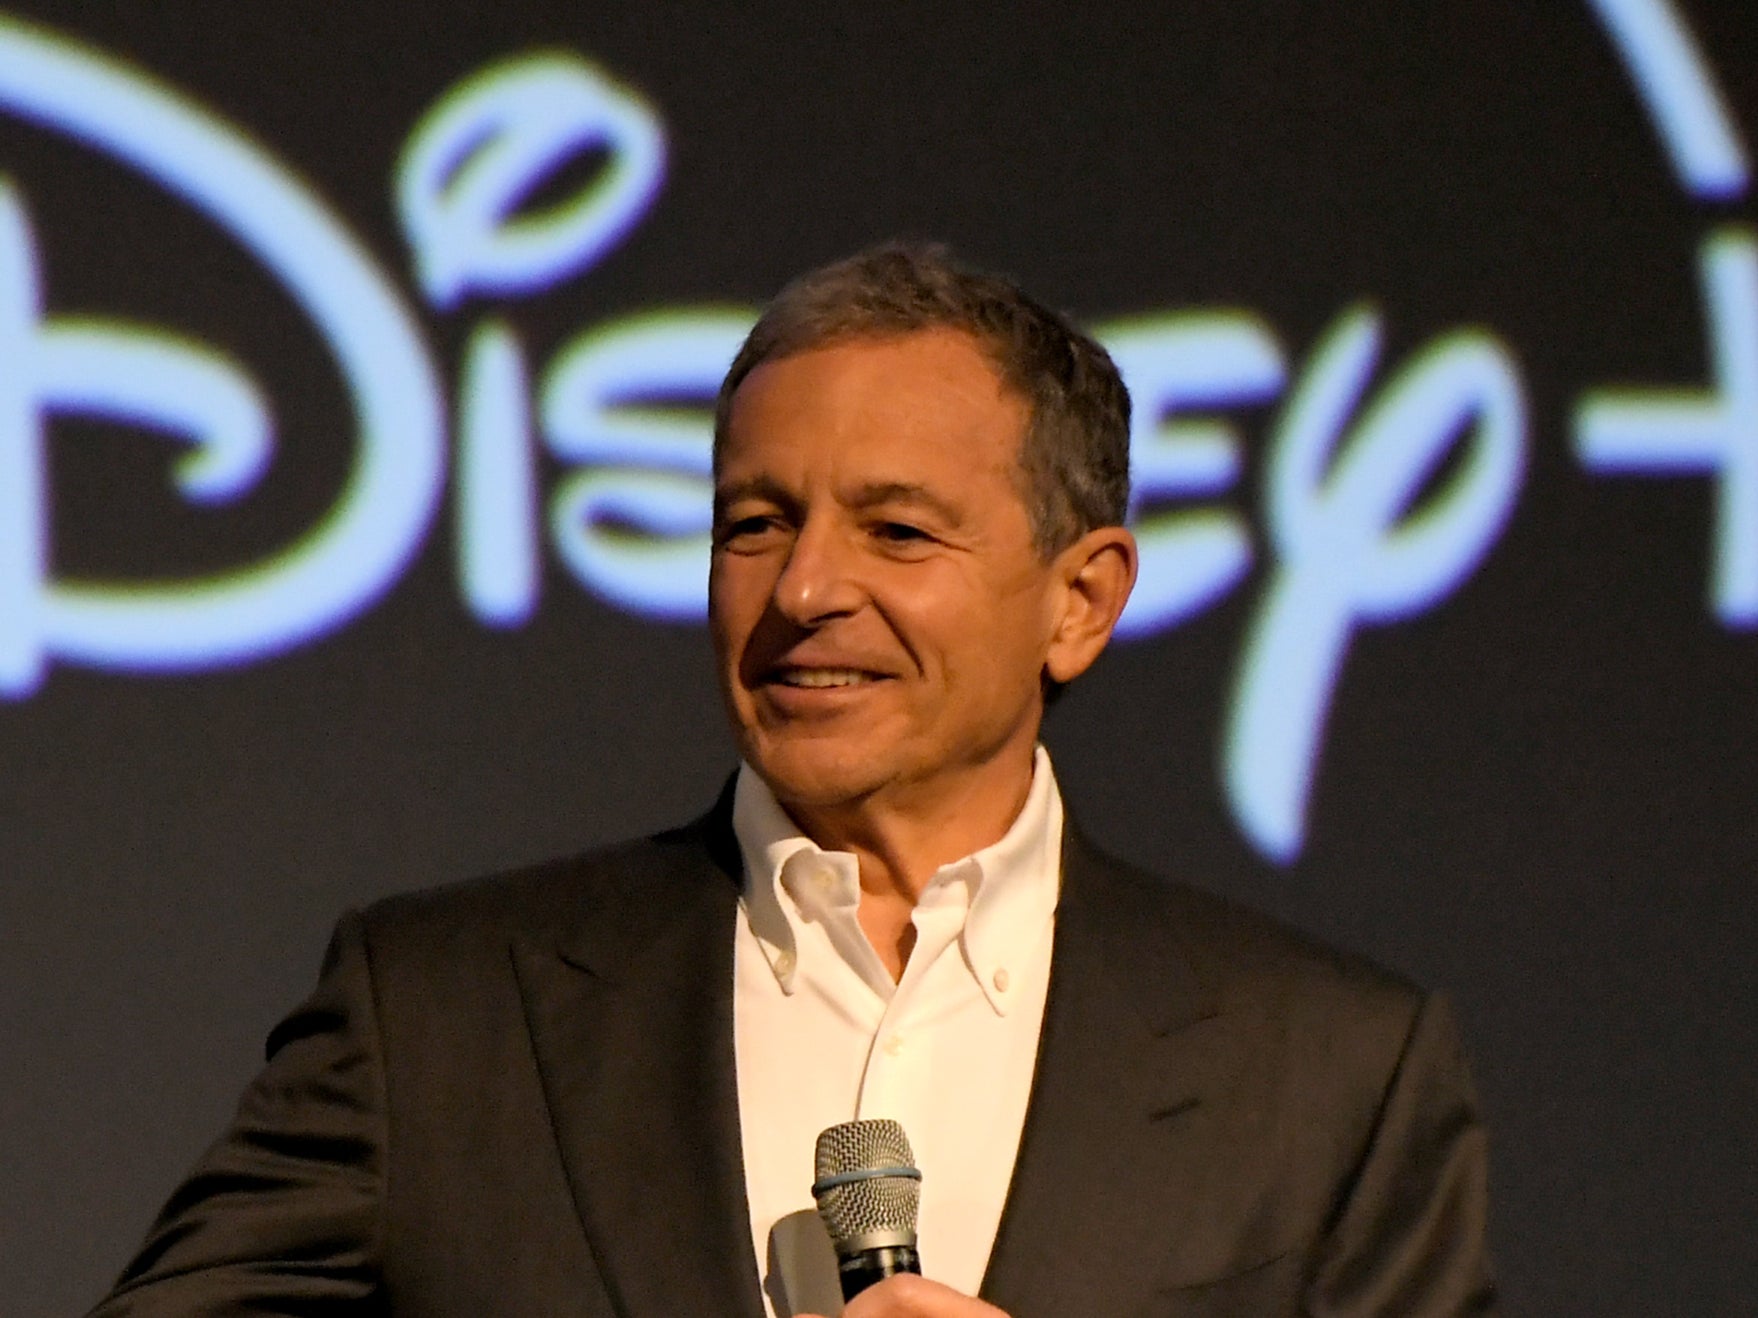 Bob Iger is back as CEO at Disney